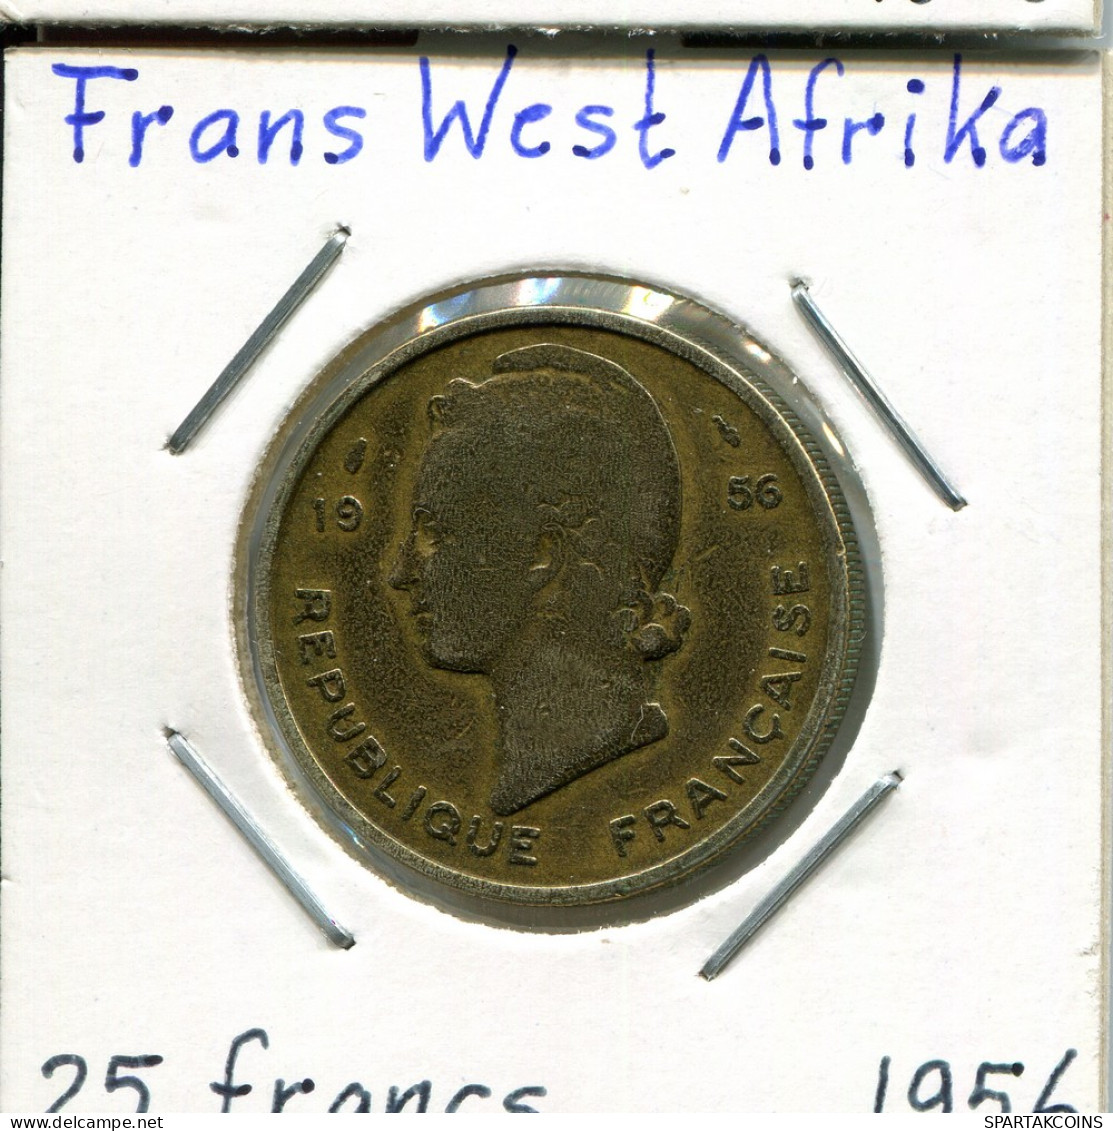 25 FRANCS 1956 Französisch WESTERN AFRICAN STATES Koloniale Münze #AM521.D - Africa Occidentale Francese